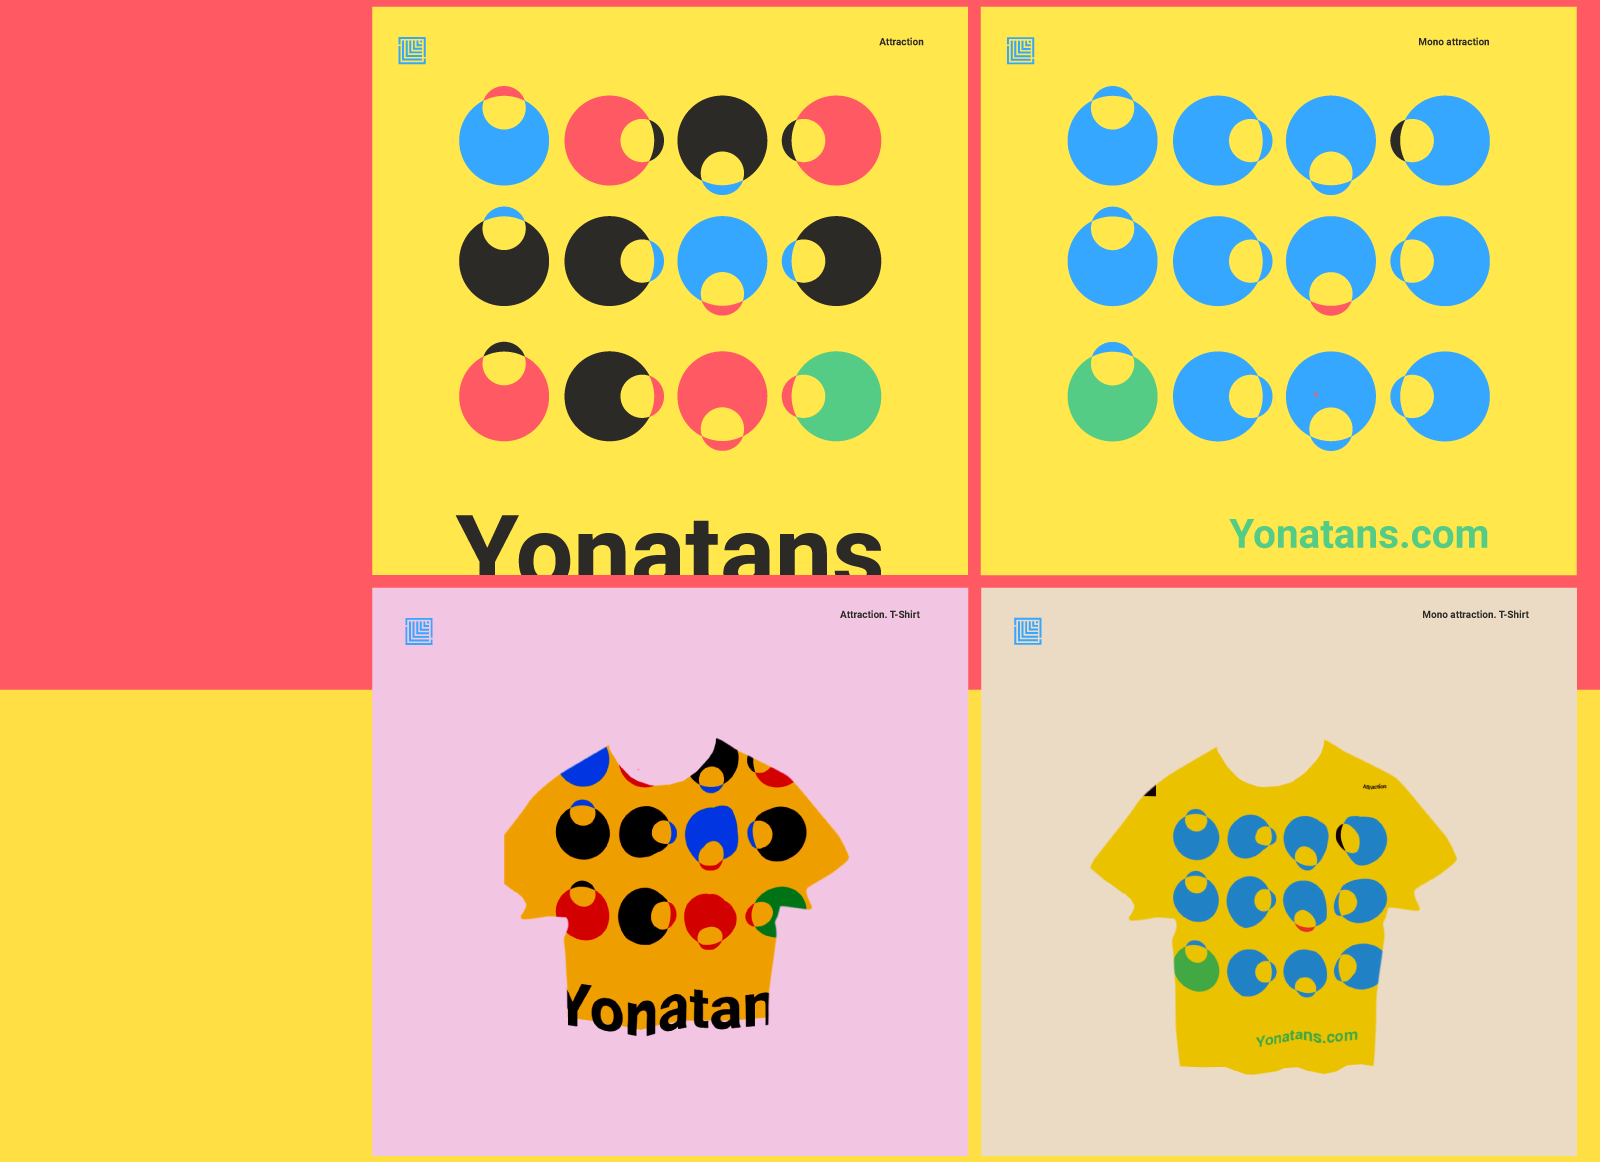 Yonatans website